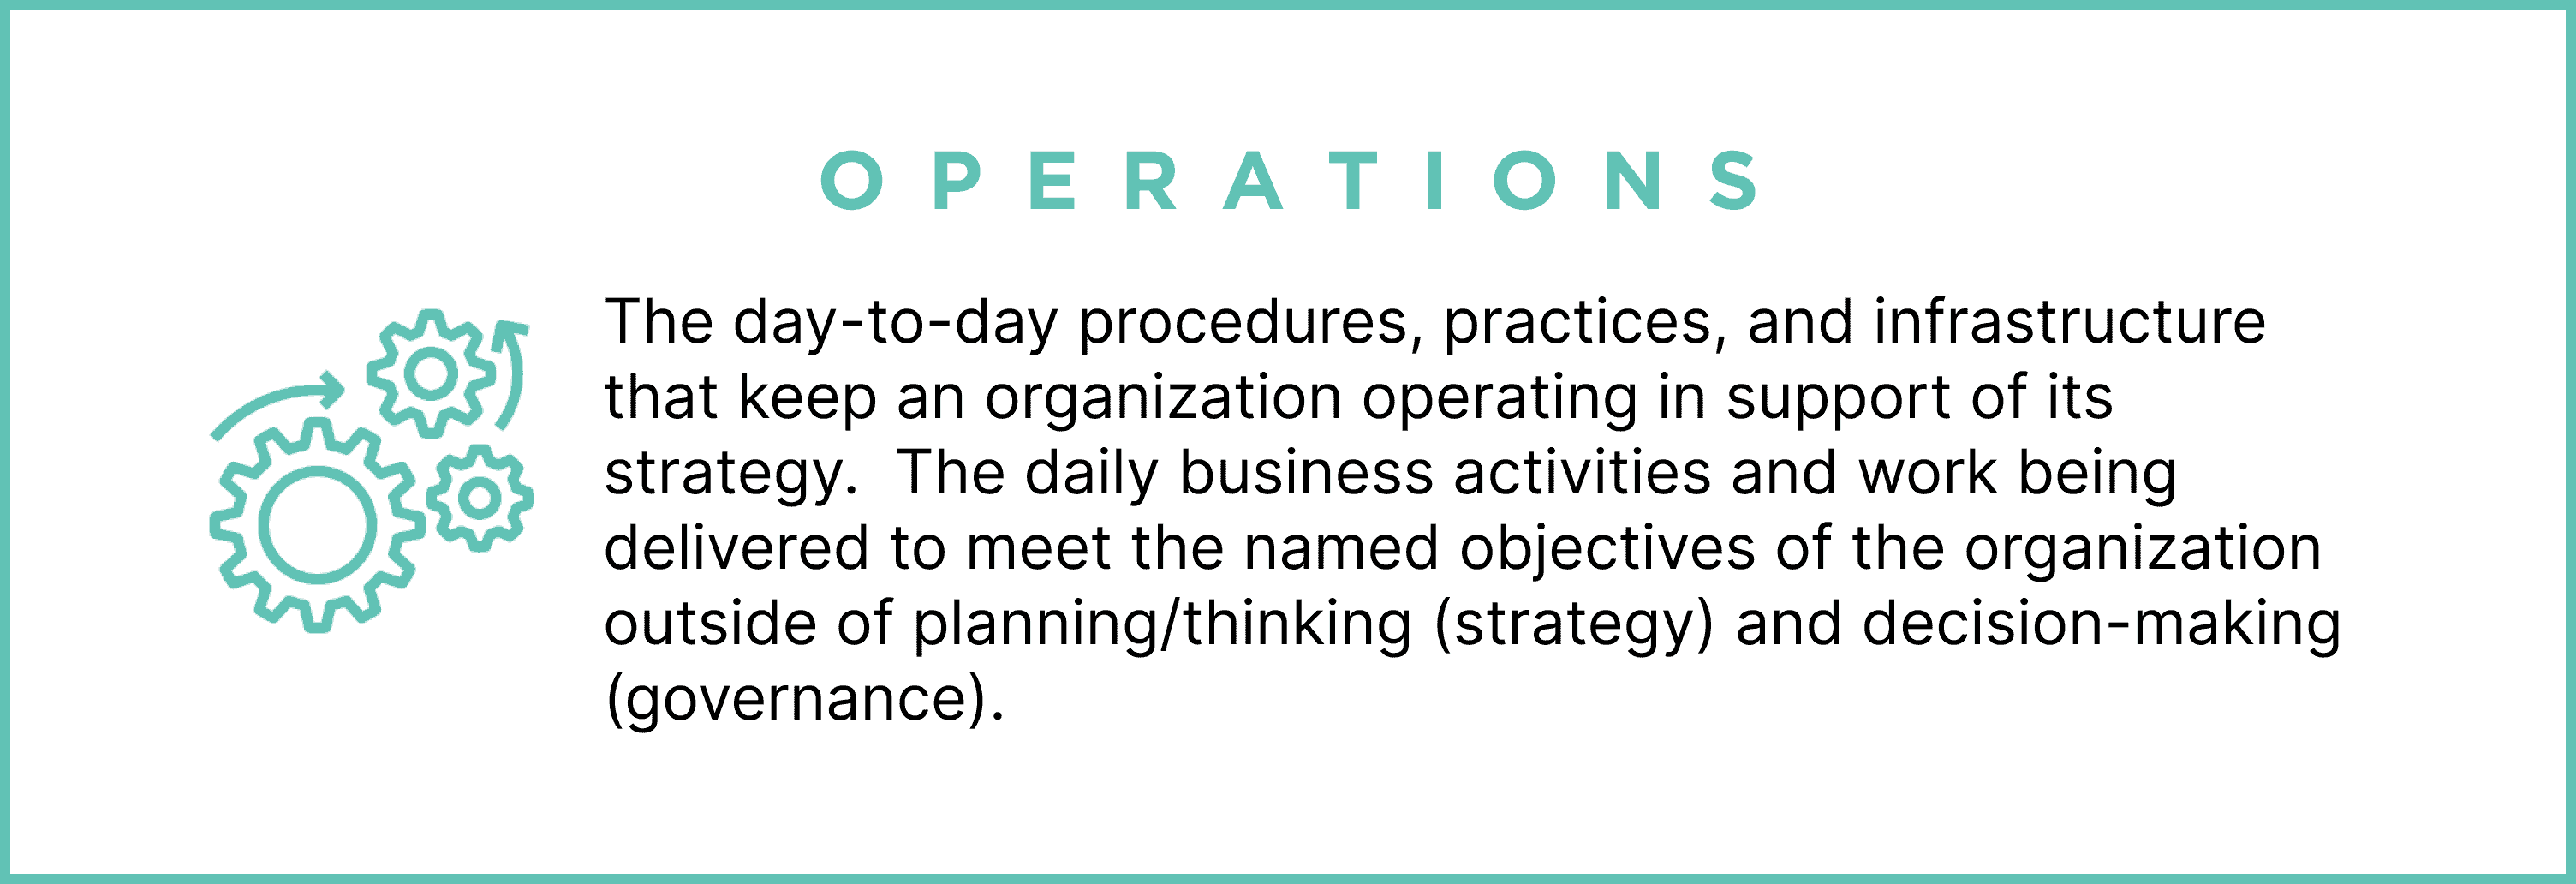 Operations44